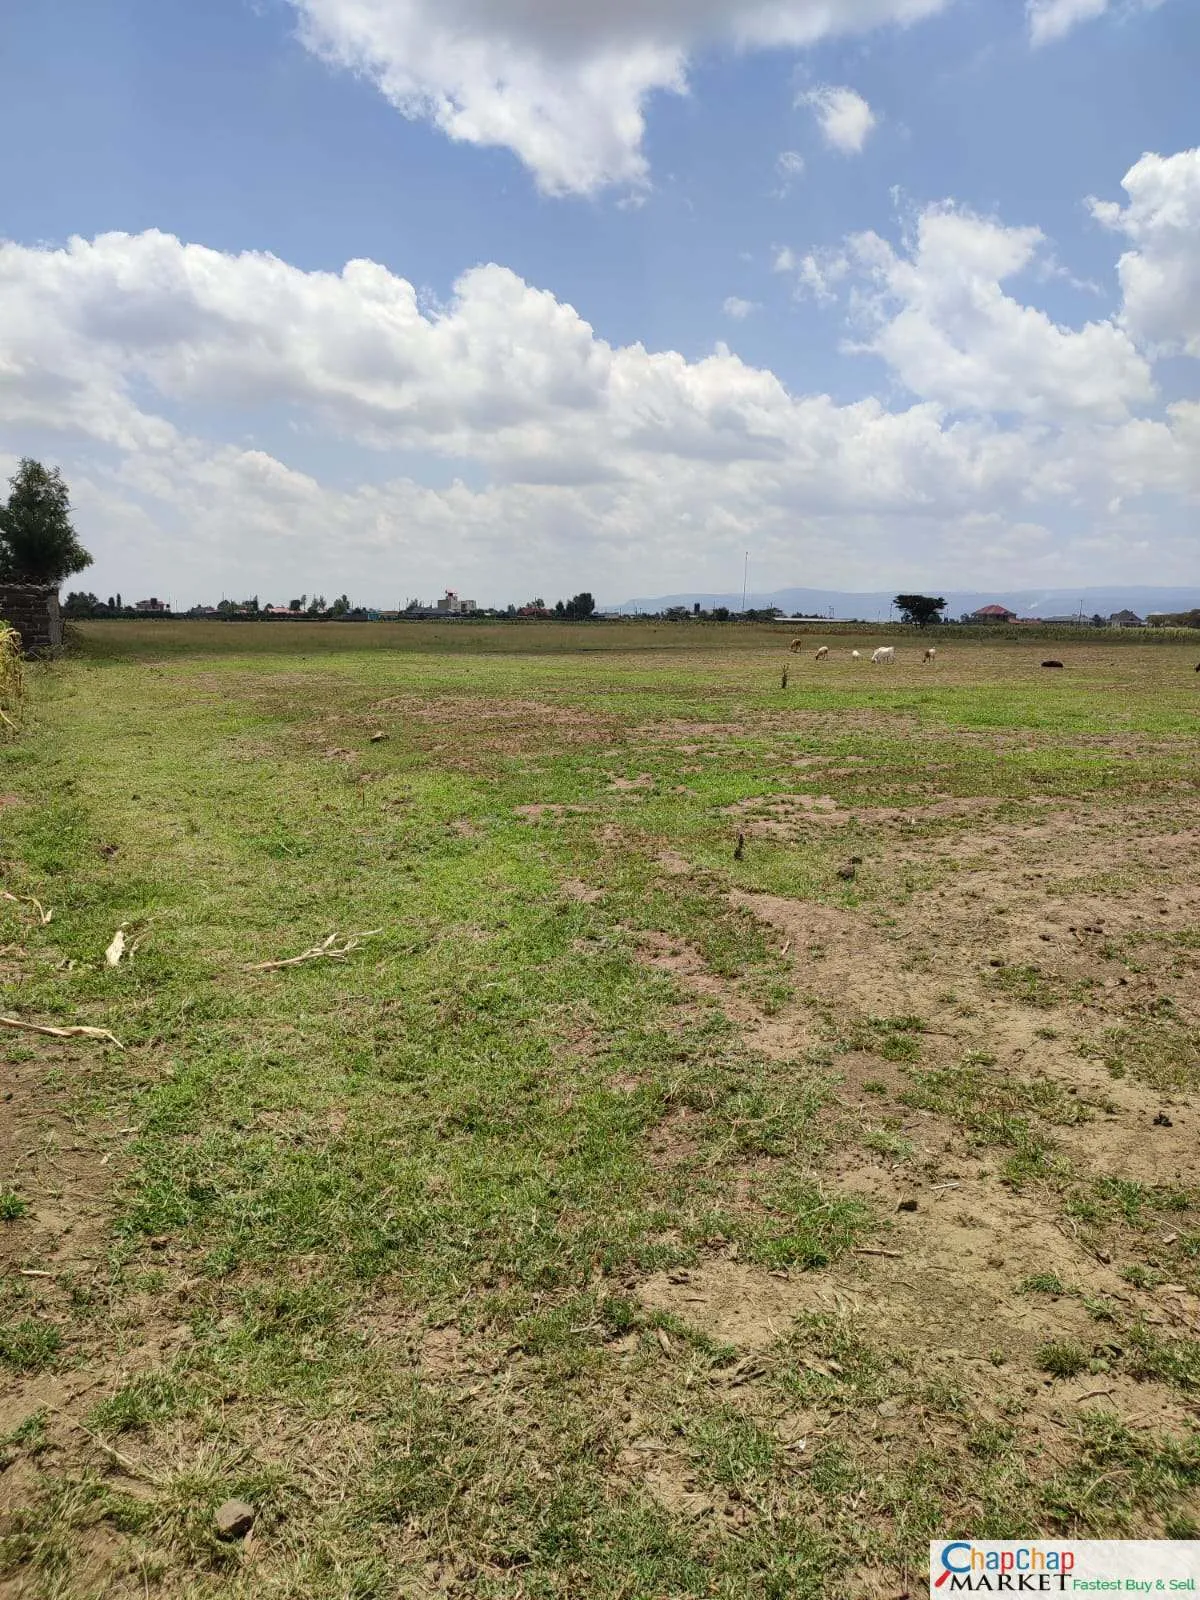 Land for Sale in Nakuru 6 acres for sale Eastgate Nakuru QUICK SALE Clean Title Deed